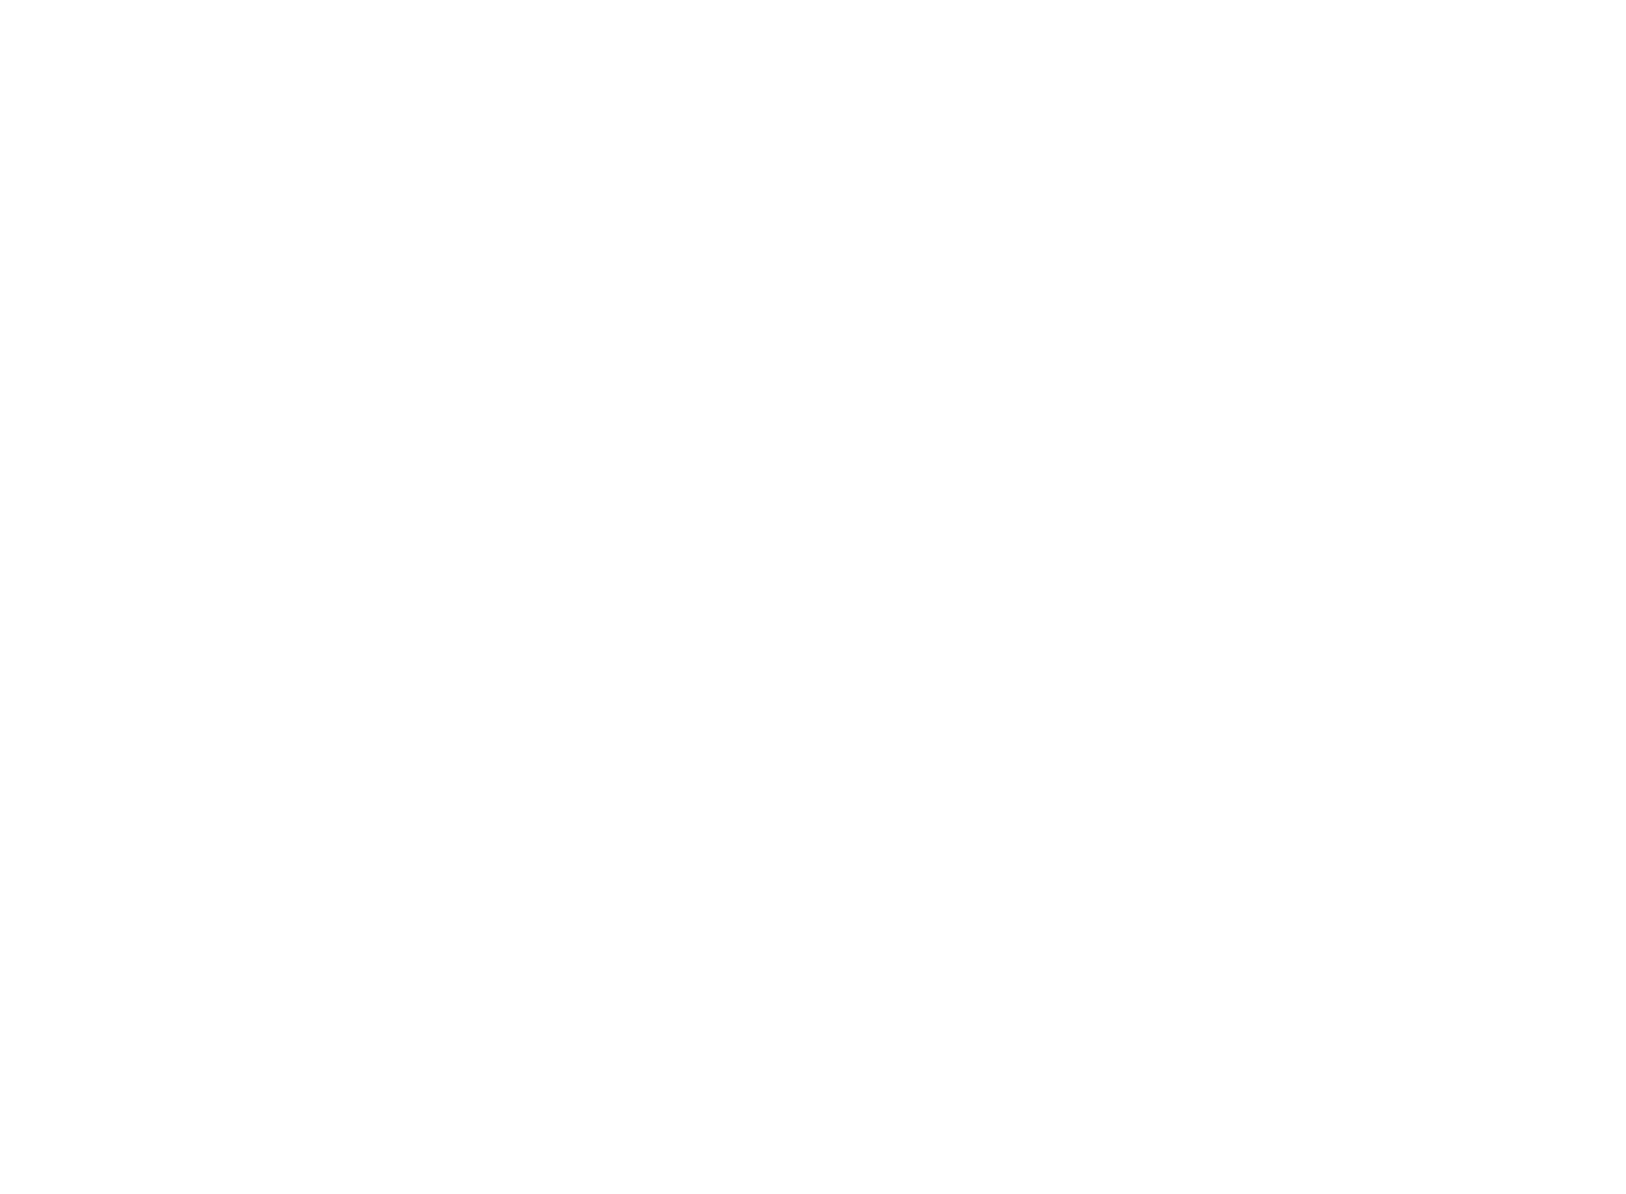 Aakash Odedra Company